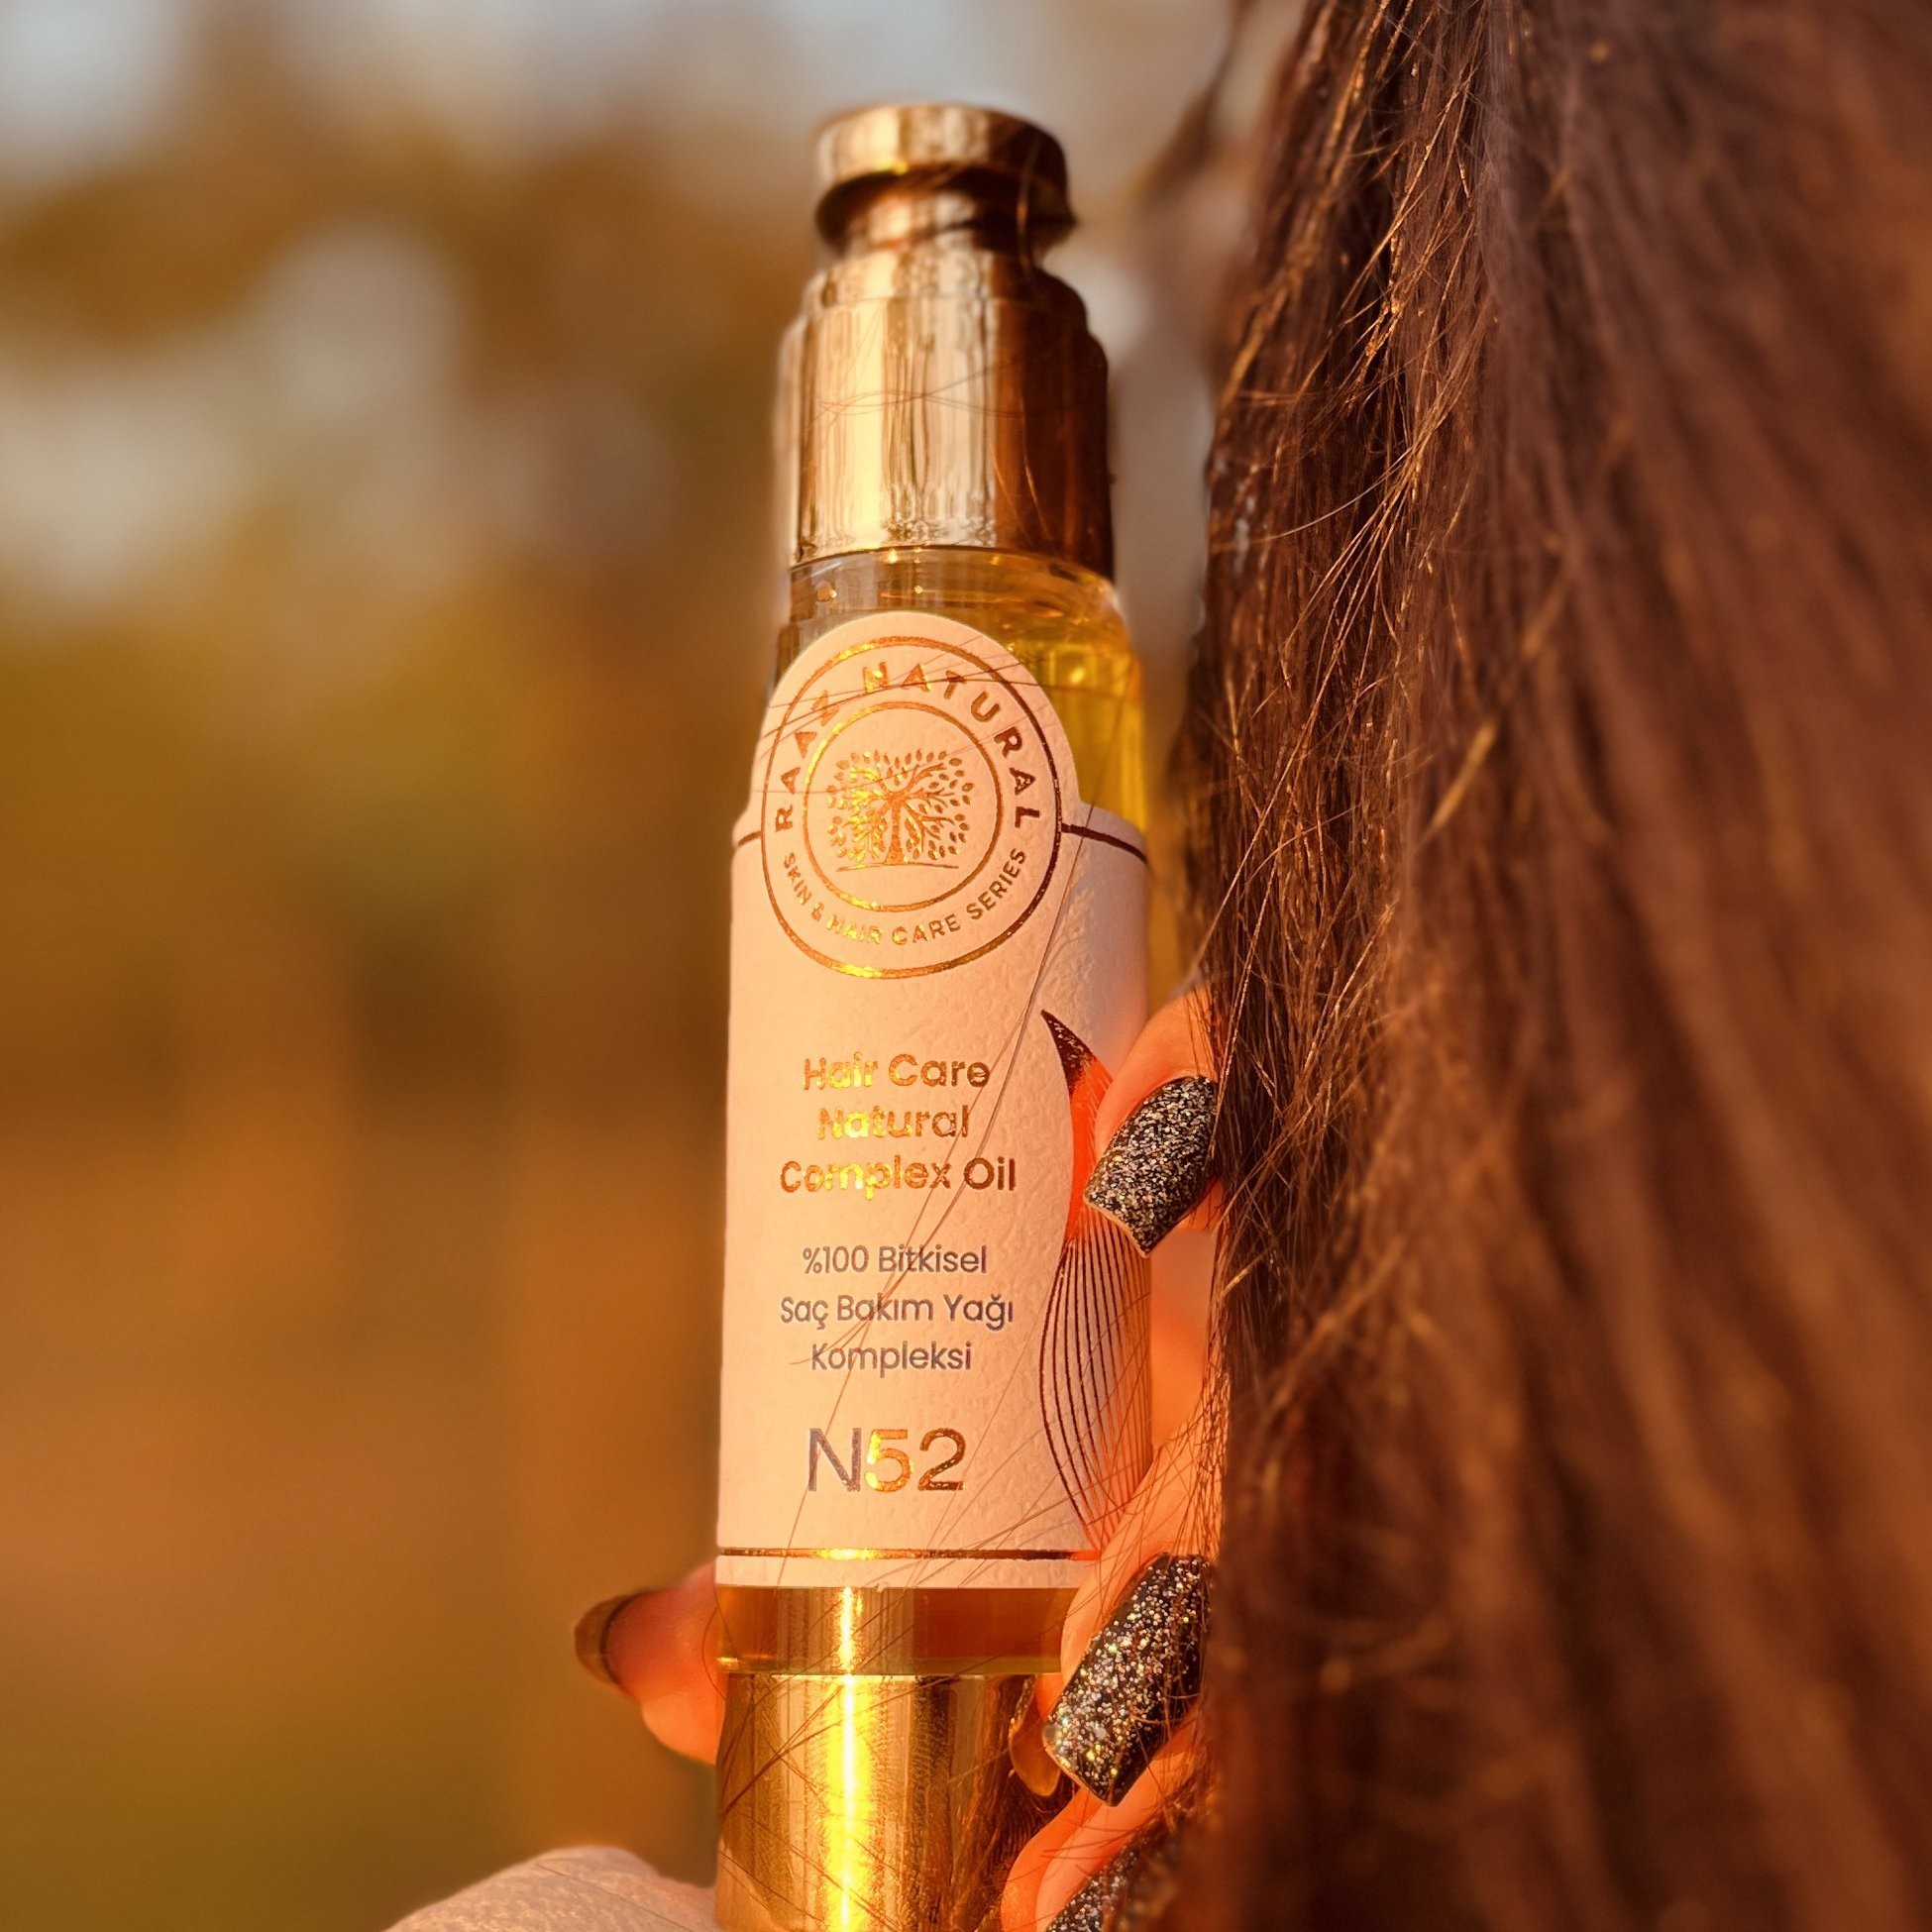 N52 %100 Bitkisel Saç Bakım Yağı Kompleksi Hair Care Natural Complex Oil